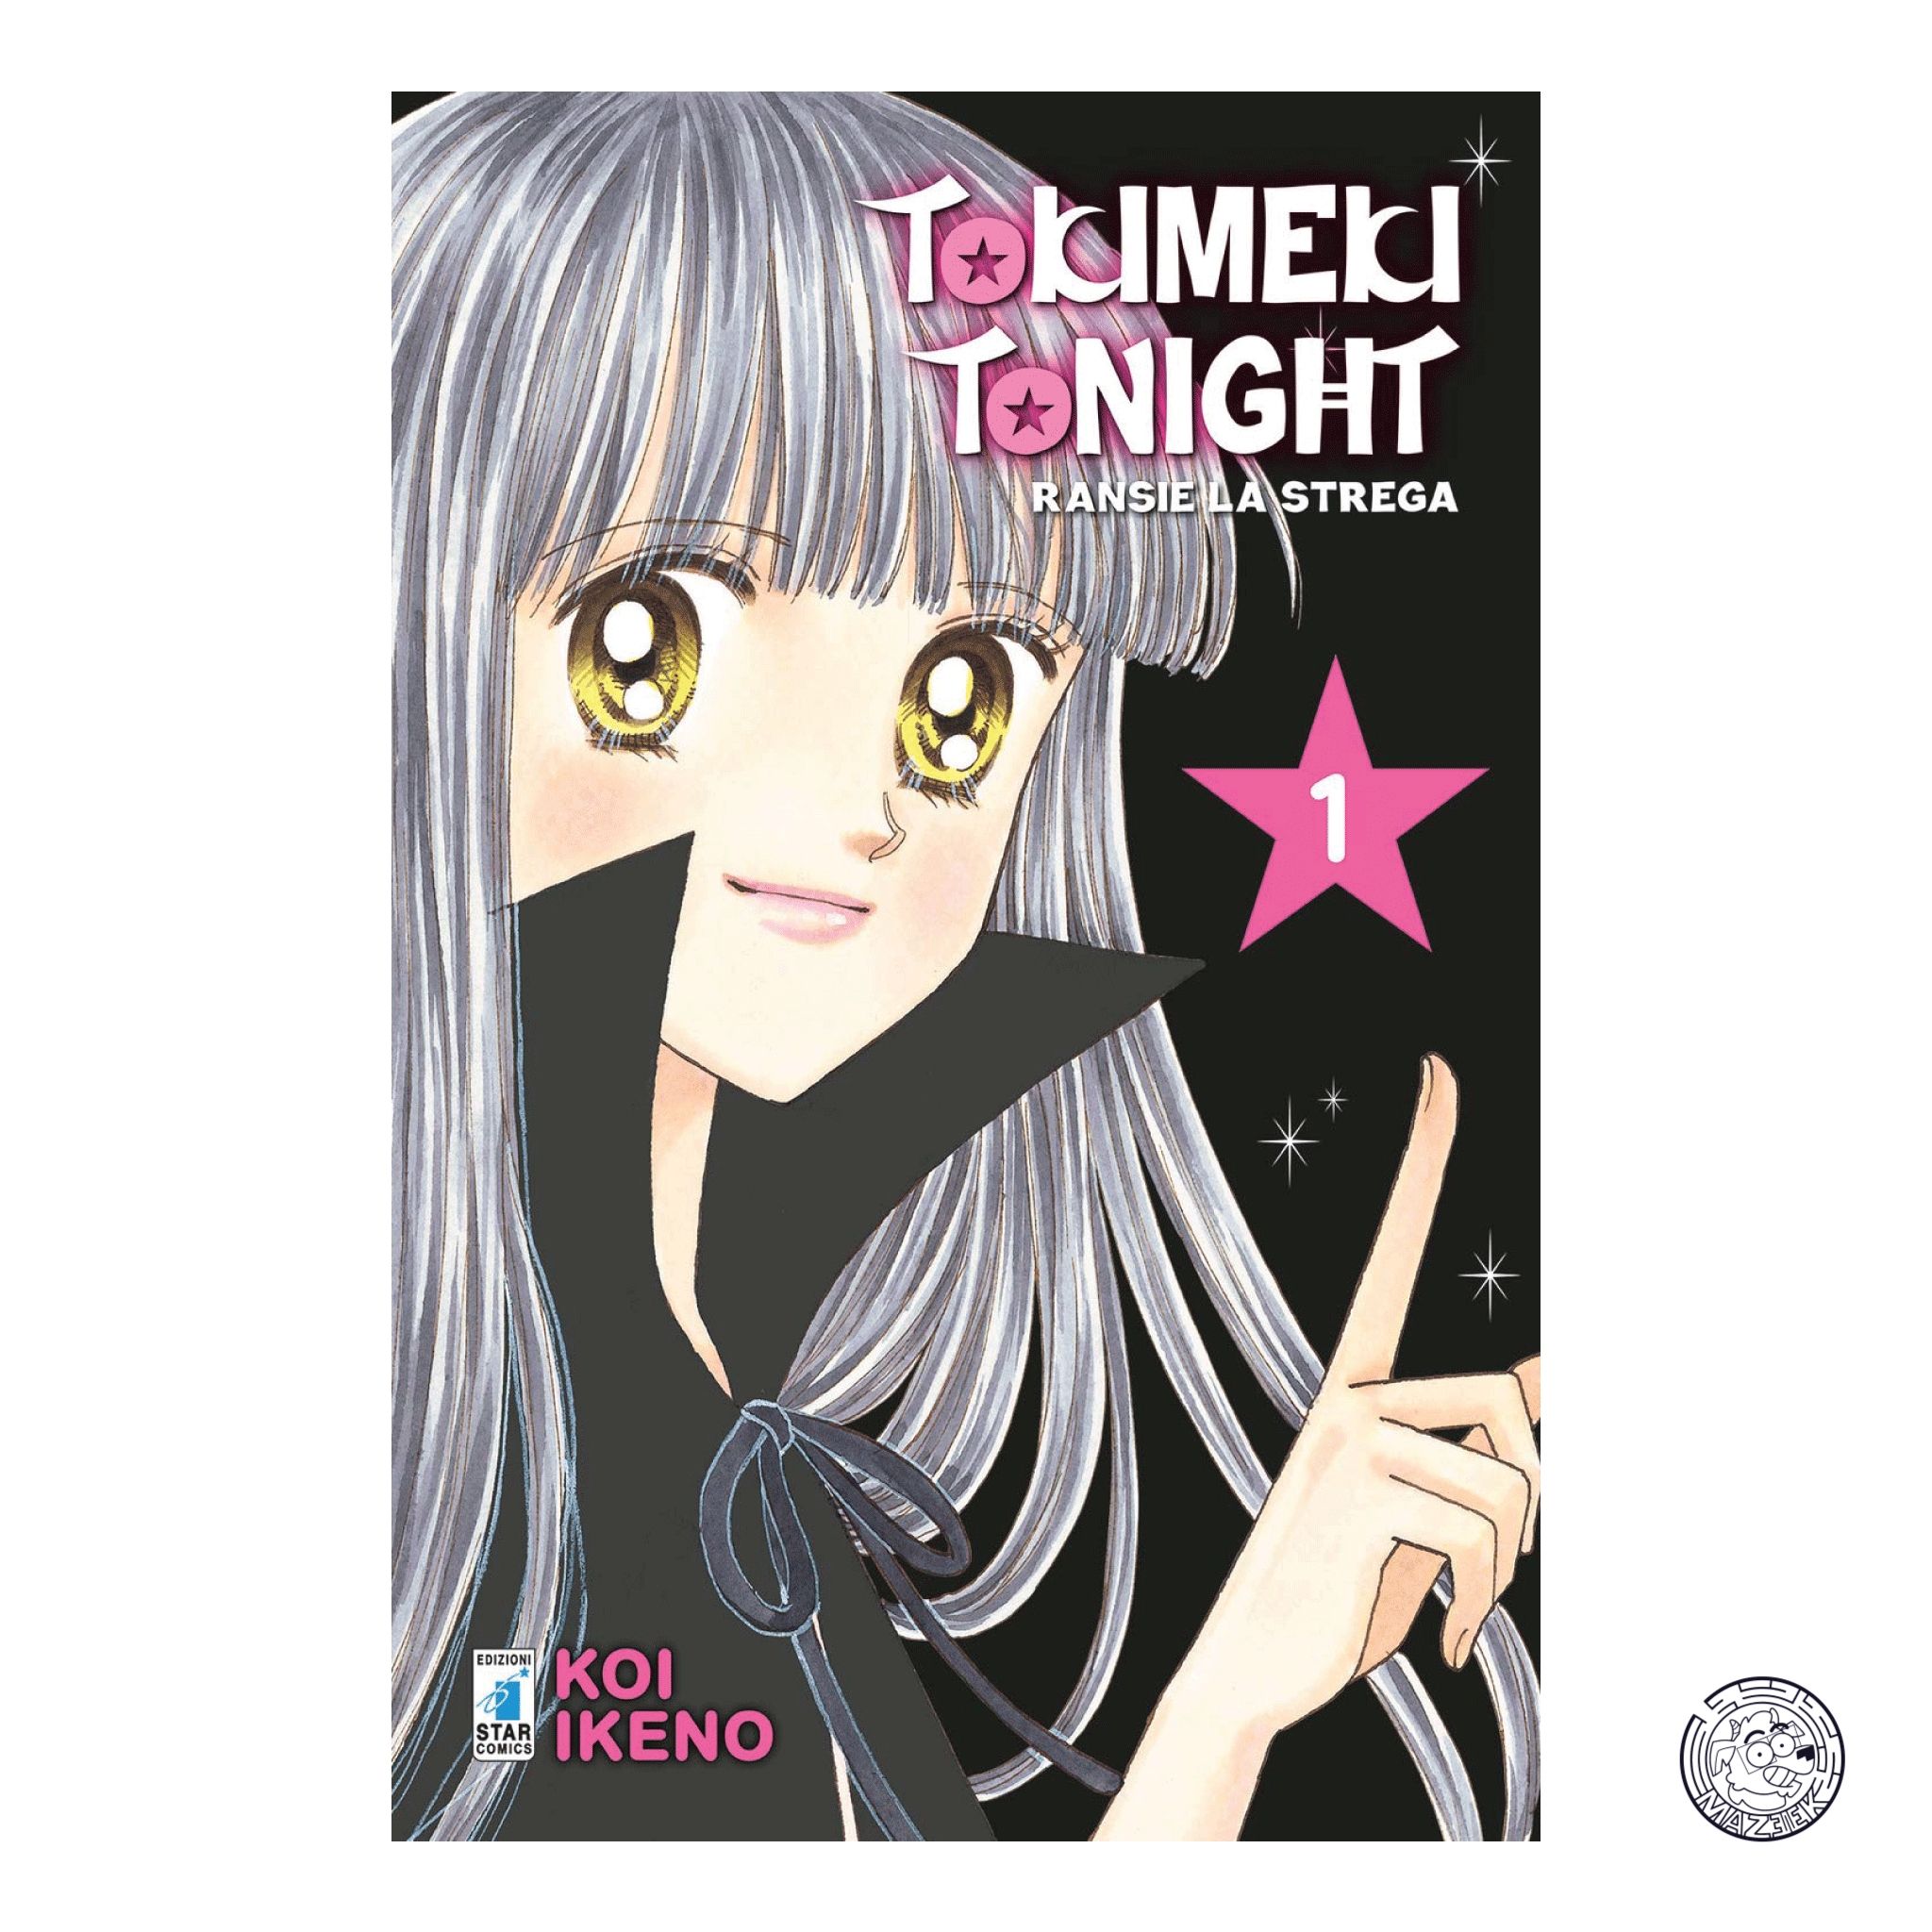 Tokimeki Tonight, Ransie la Strega - New Edition 01